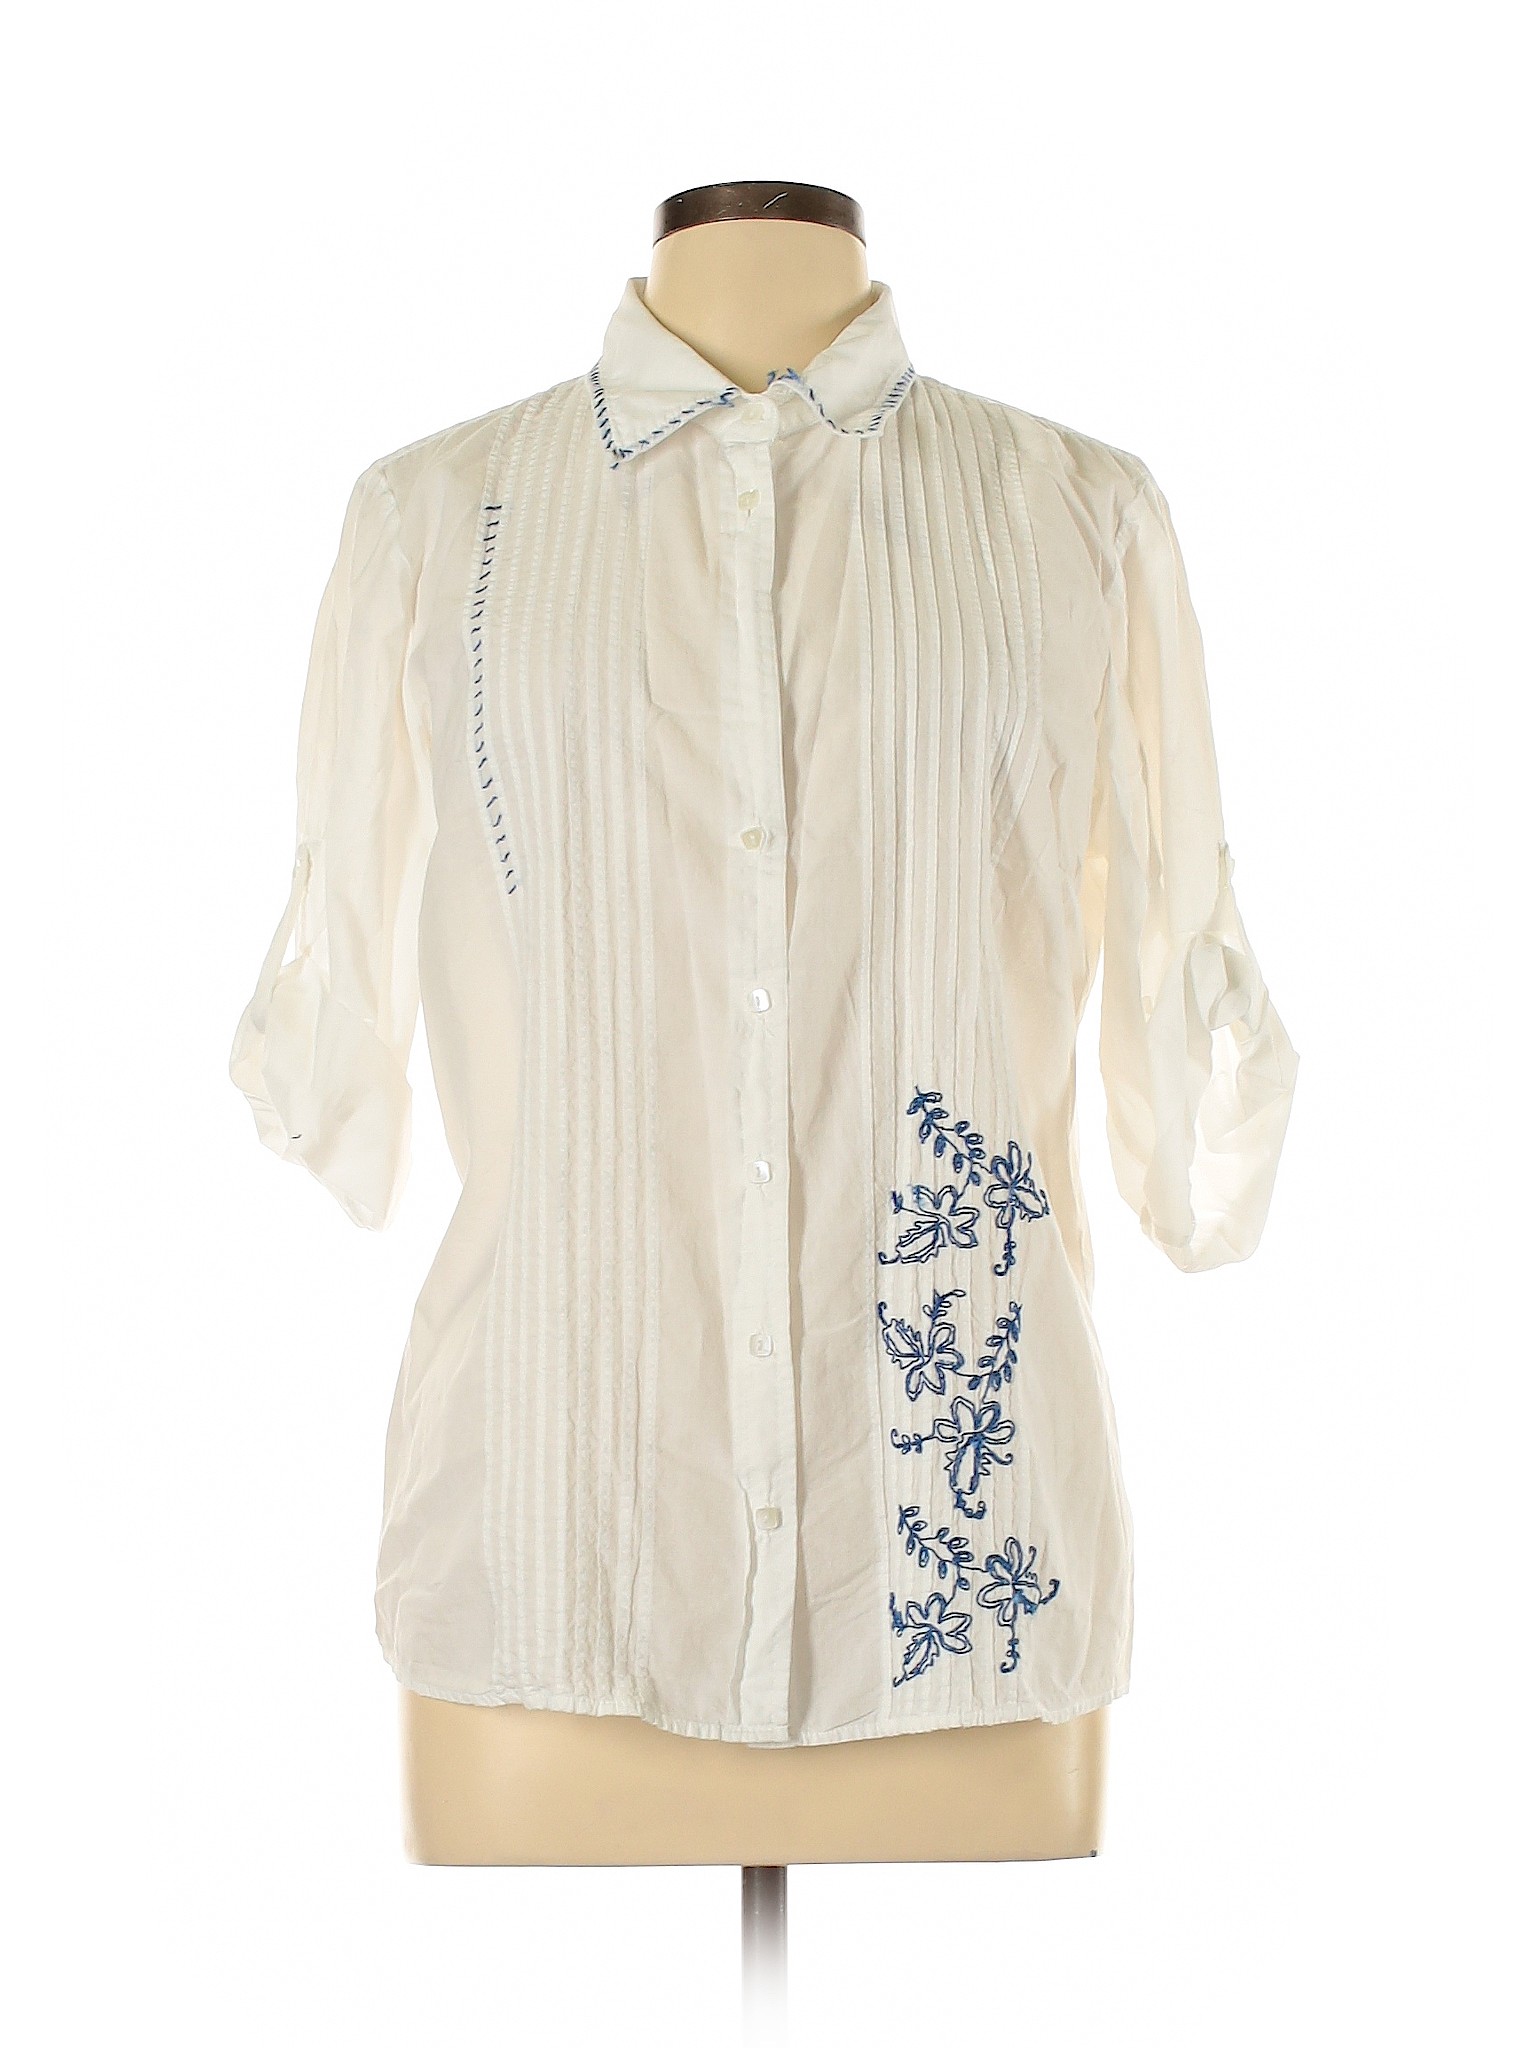 Gloria Vanderbilt Women White 3/4 Sleeve Button-Down Shirt L | eBay